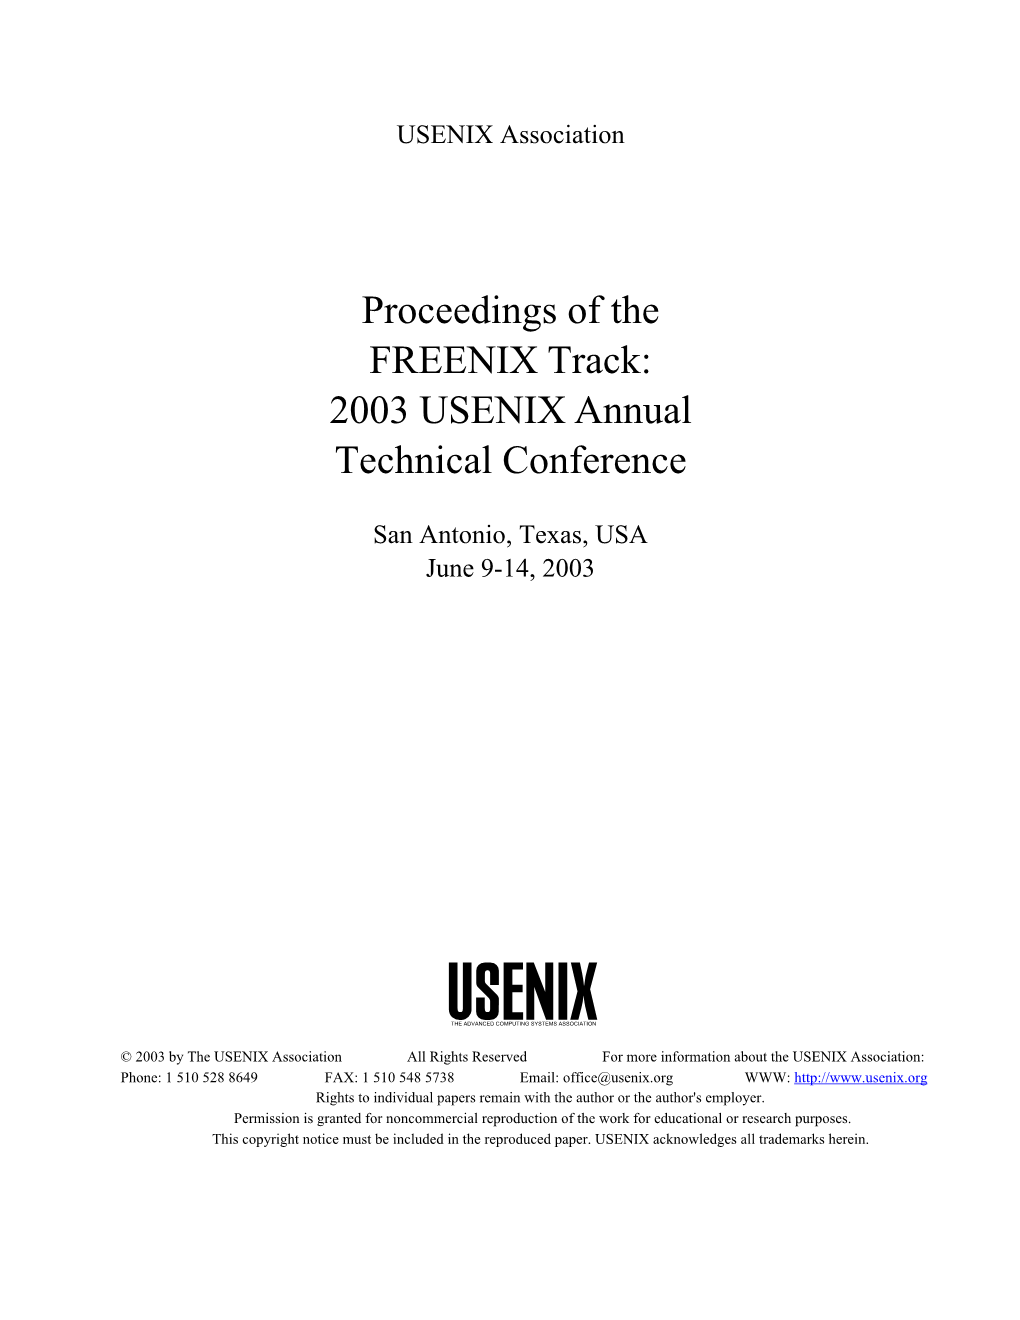 Proceedings of the FREENIX Track: 2003 USENIX Annual Technical Conference